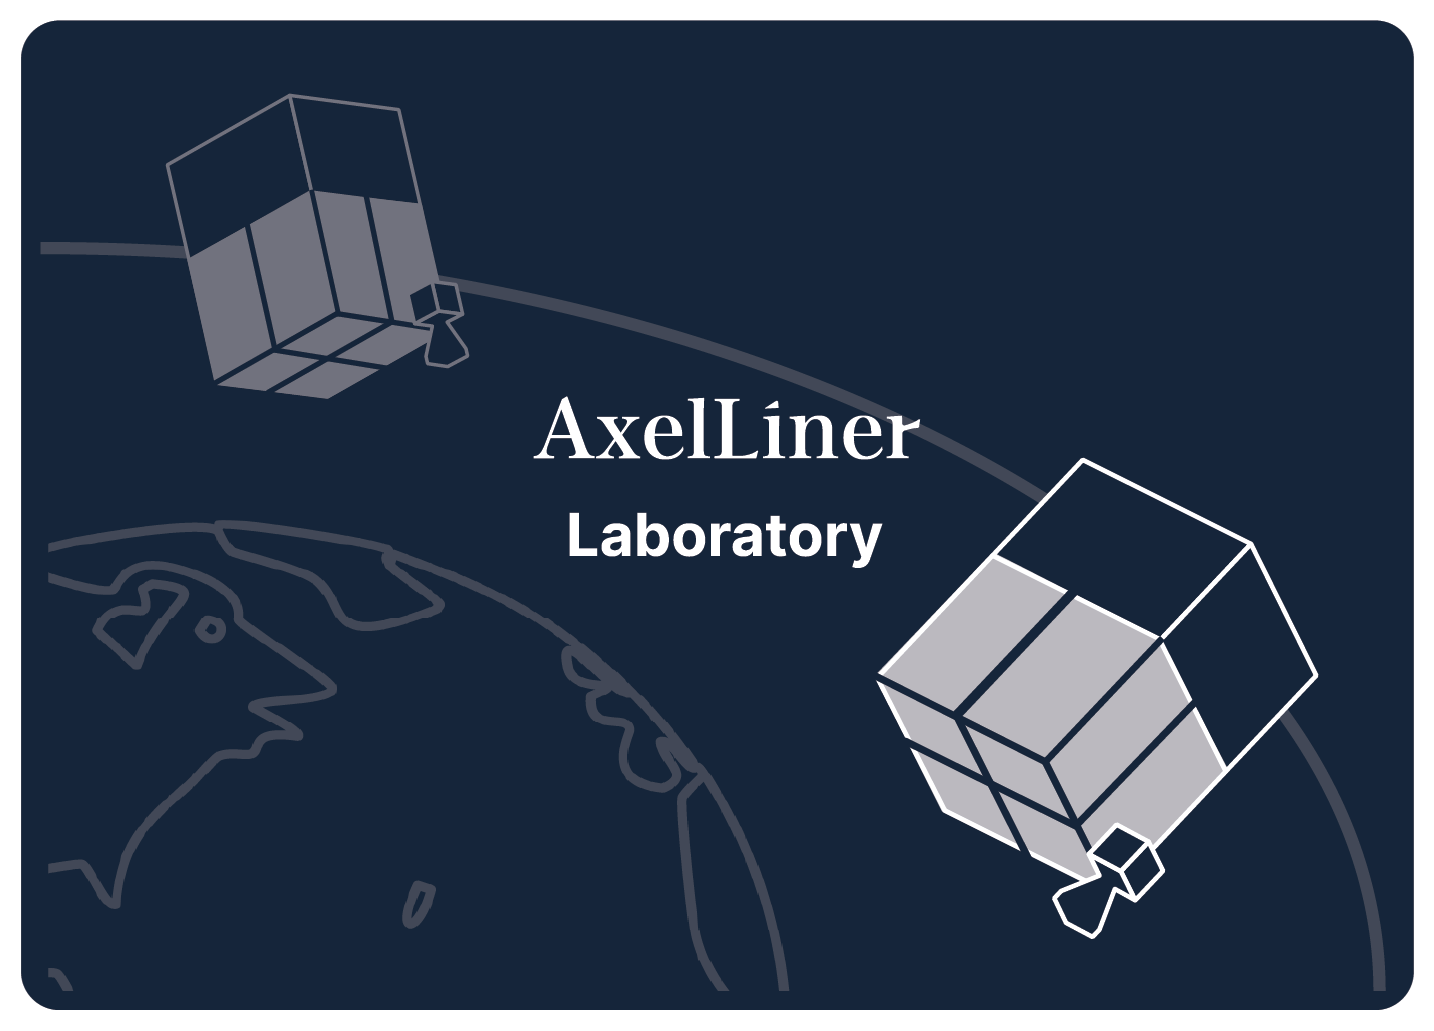 AxelLiner Laboratory (AL Lab)